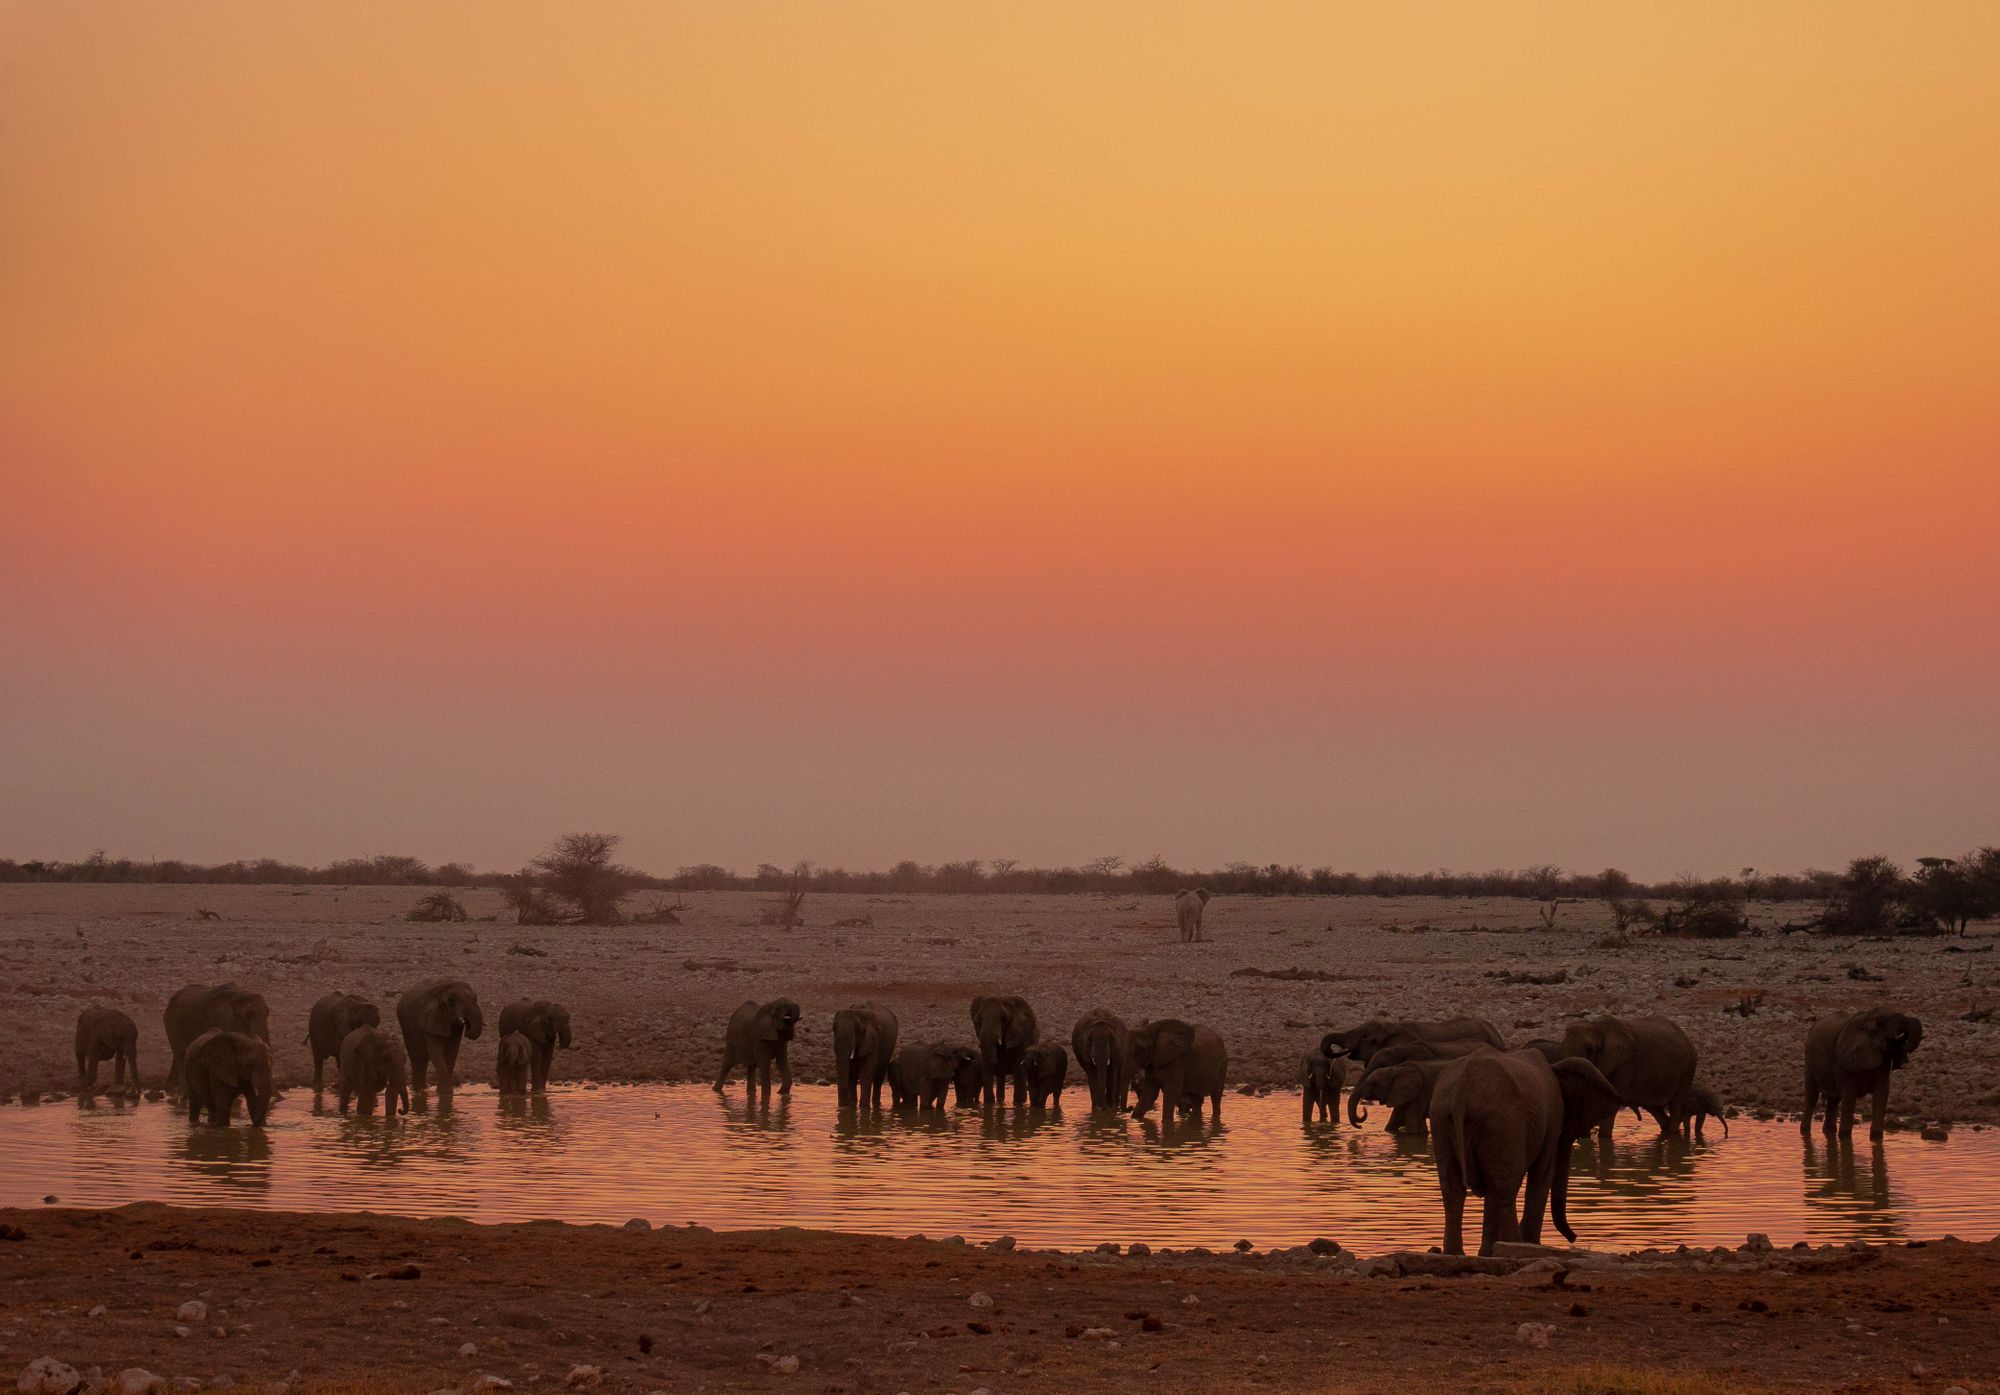 Elephants gathered at a waterhole at sunset.